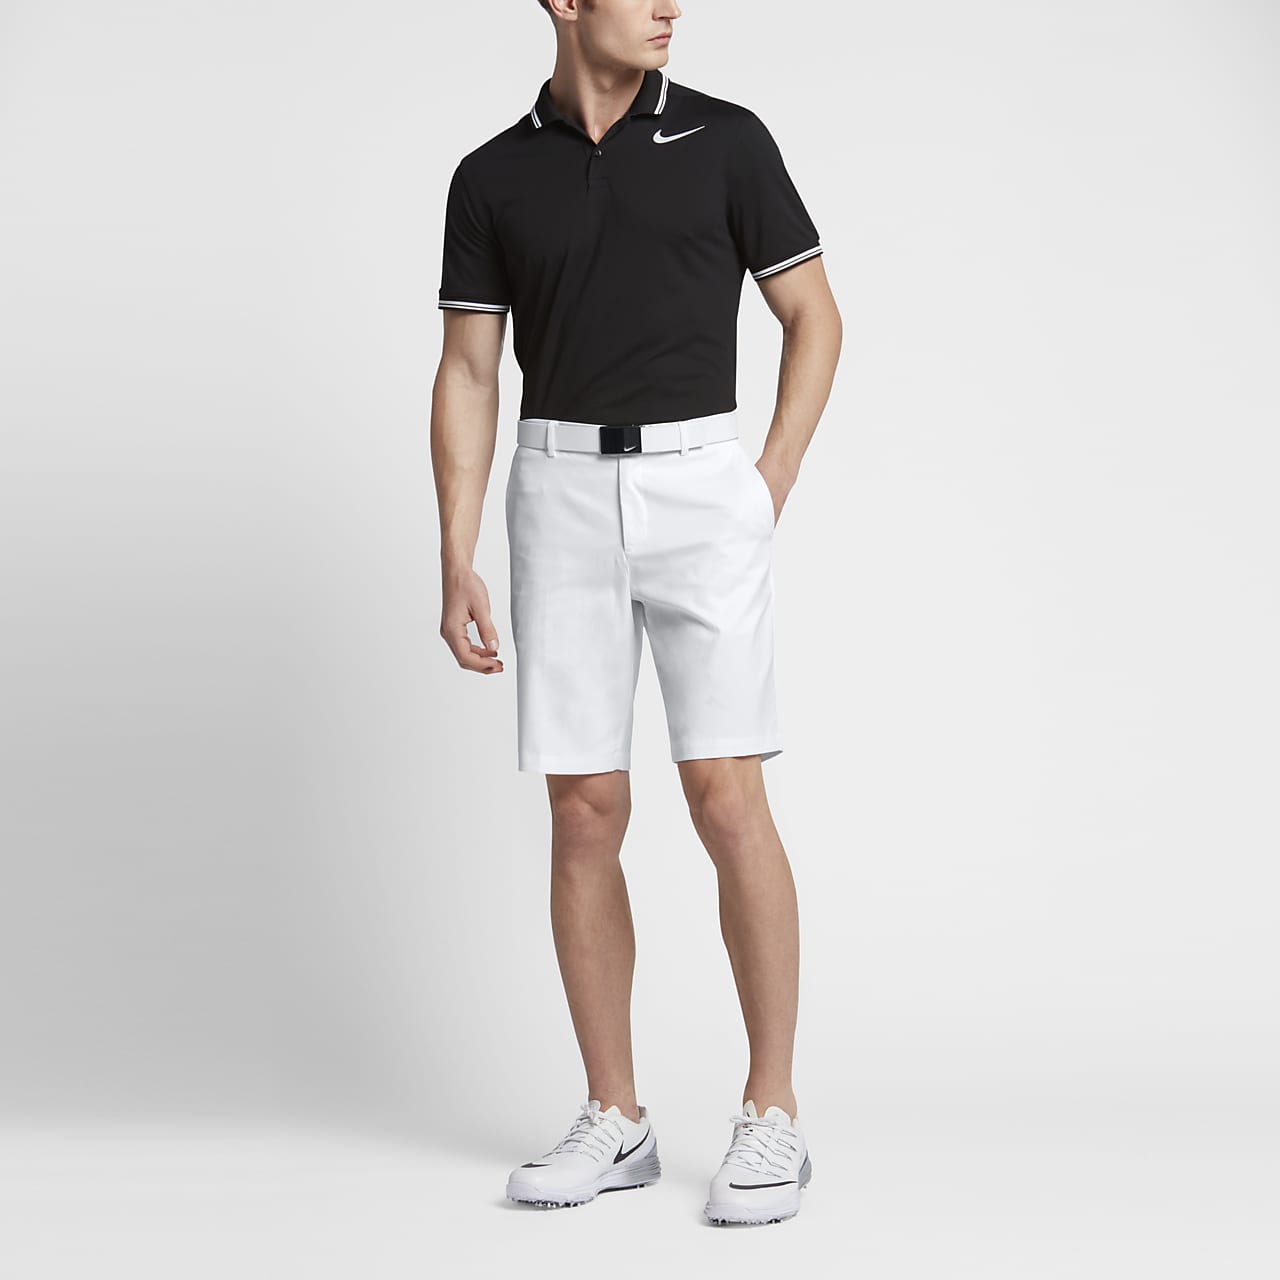 Royal & Awesome Pastel Mens Golf Shorts, Golf Shorts Men, Mens Dress Shorts  for Men, Golf Shorts for Men Stretch Slim Fit at  Men’s Clothing